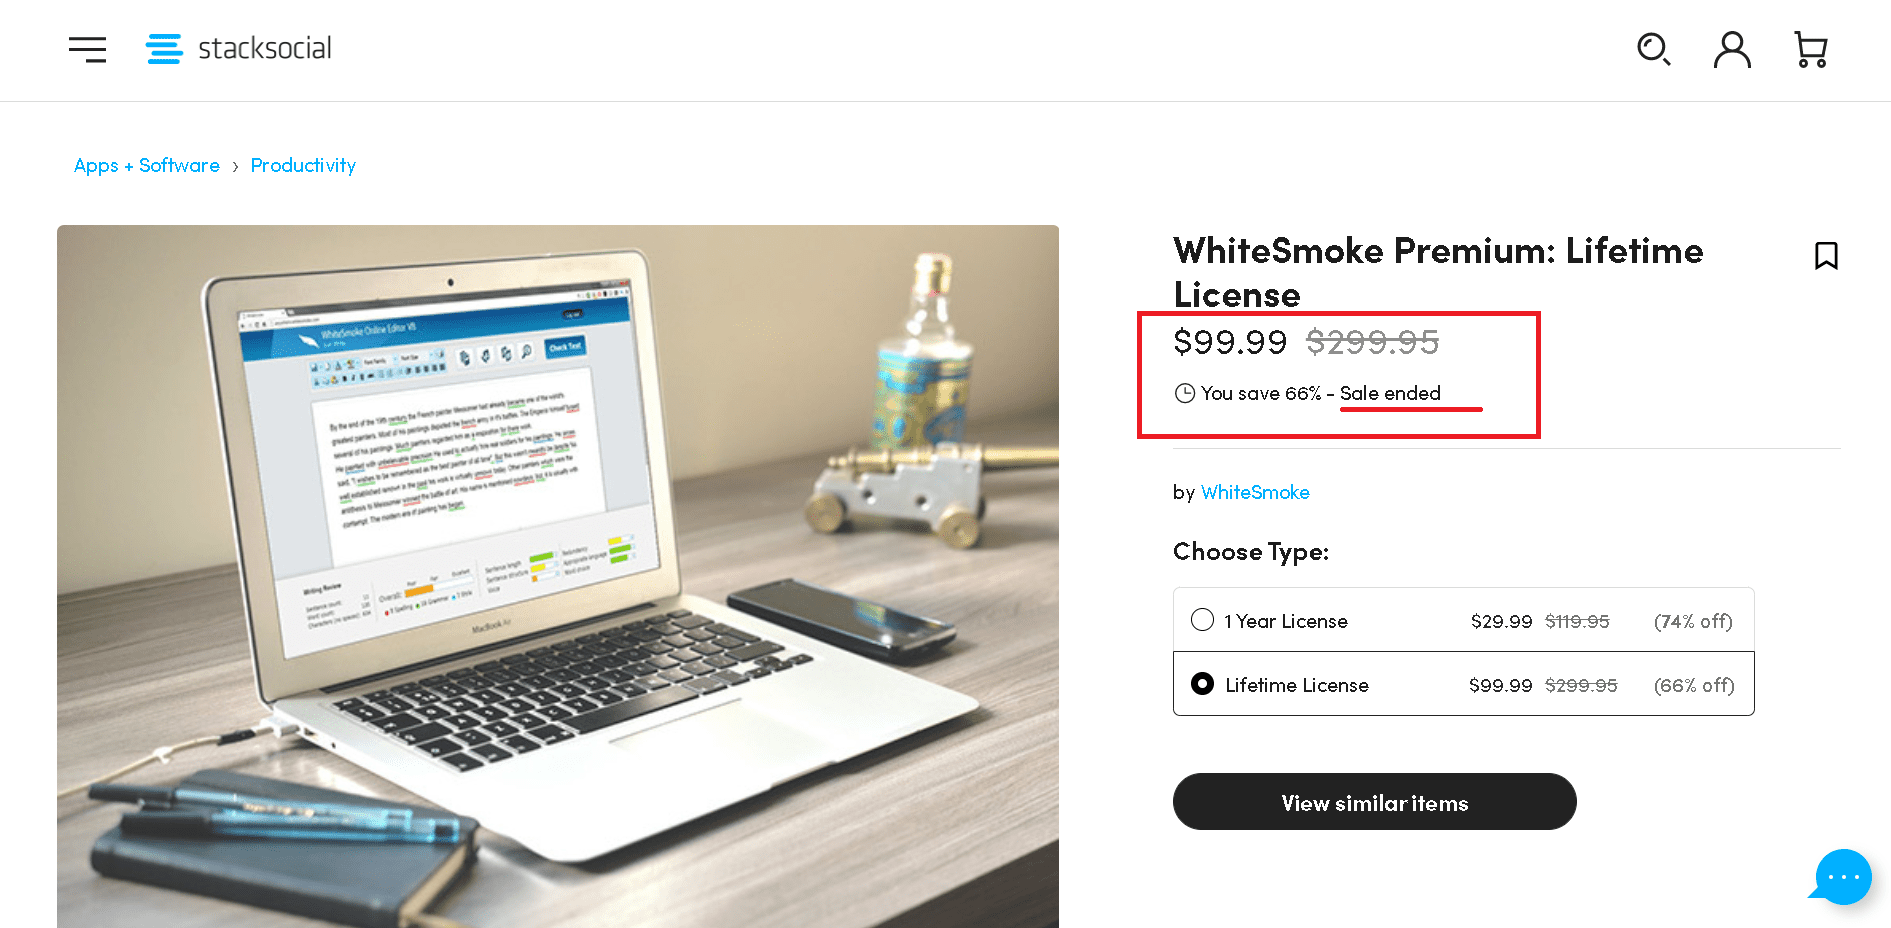 White Smoke grammar checker expired lifetime deal